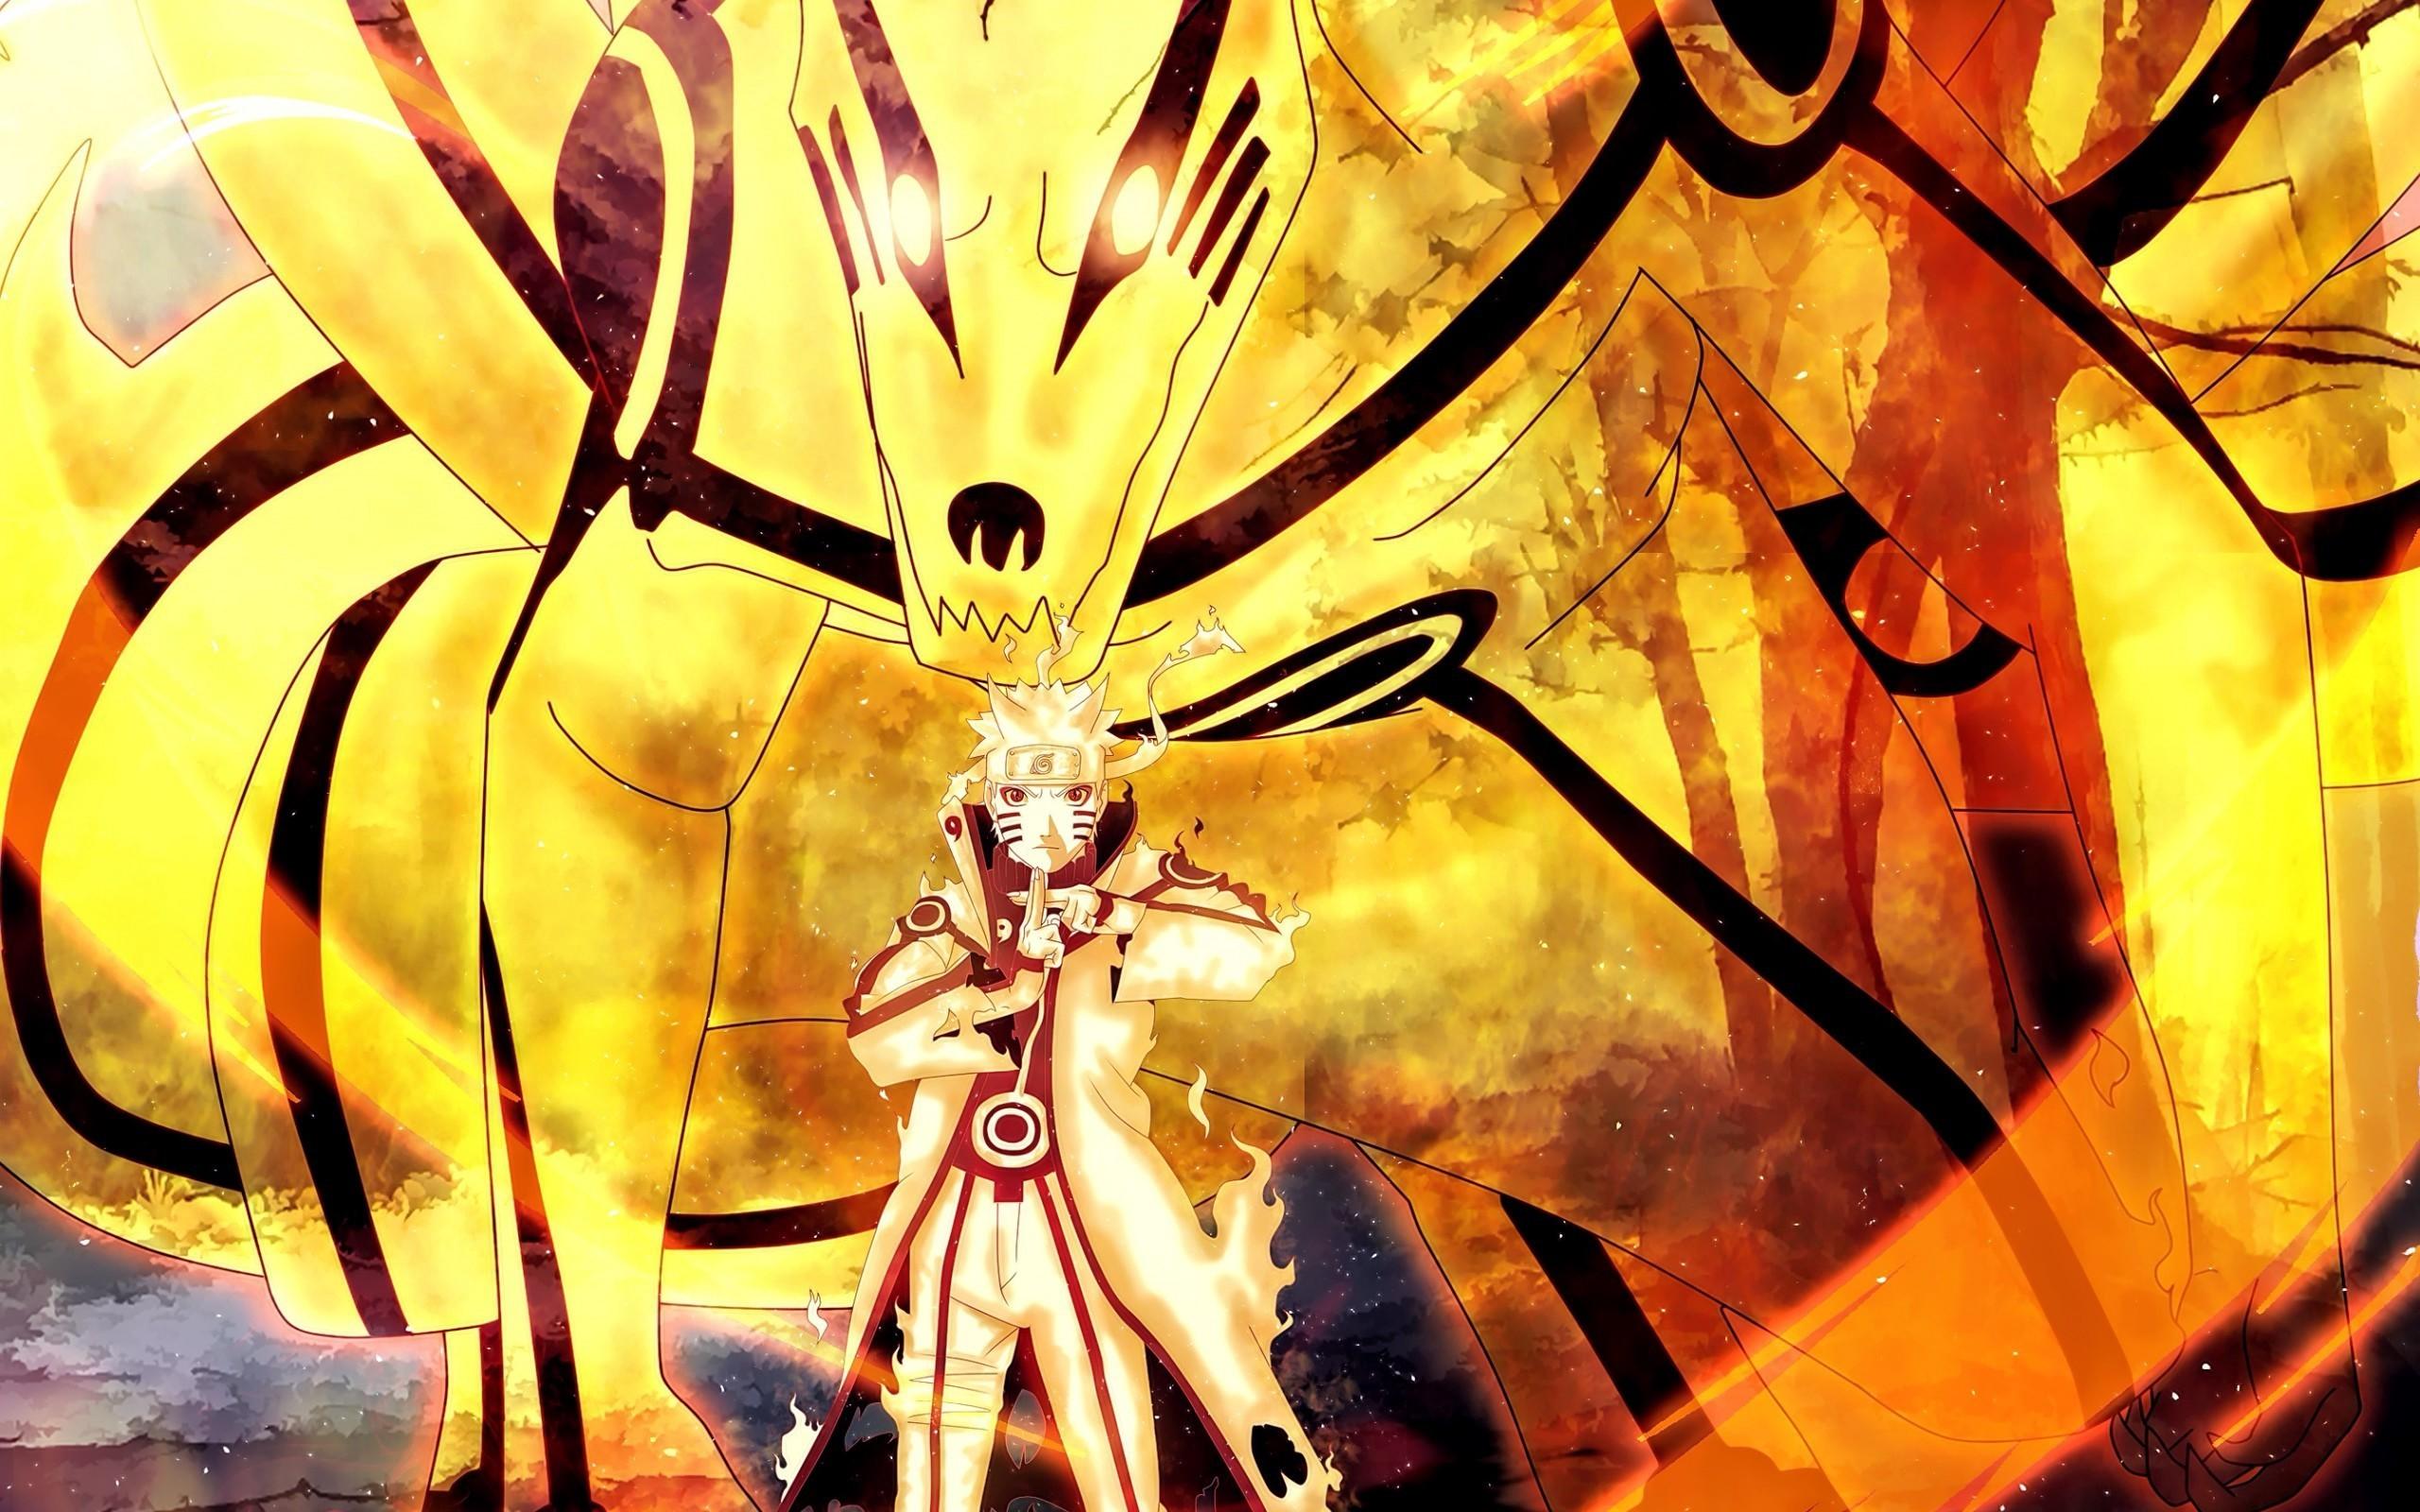 Uzumaki Naruto Shippuden Wallpaper background picture